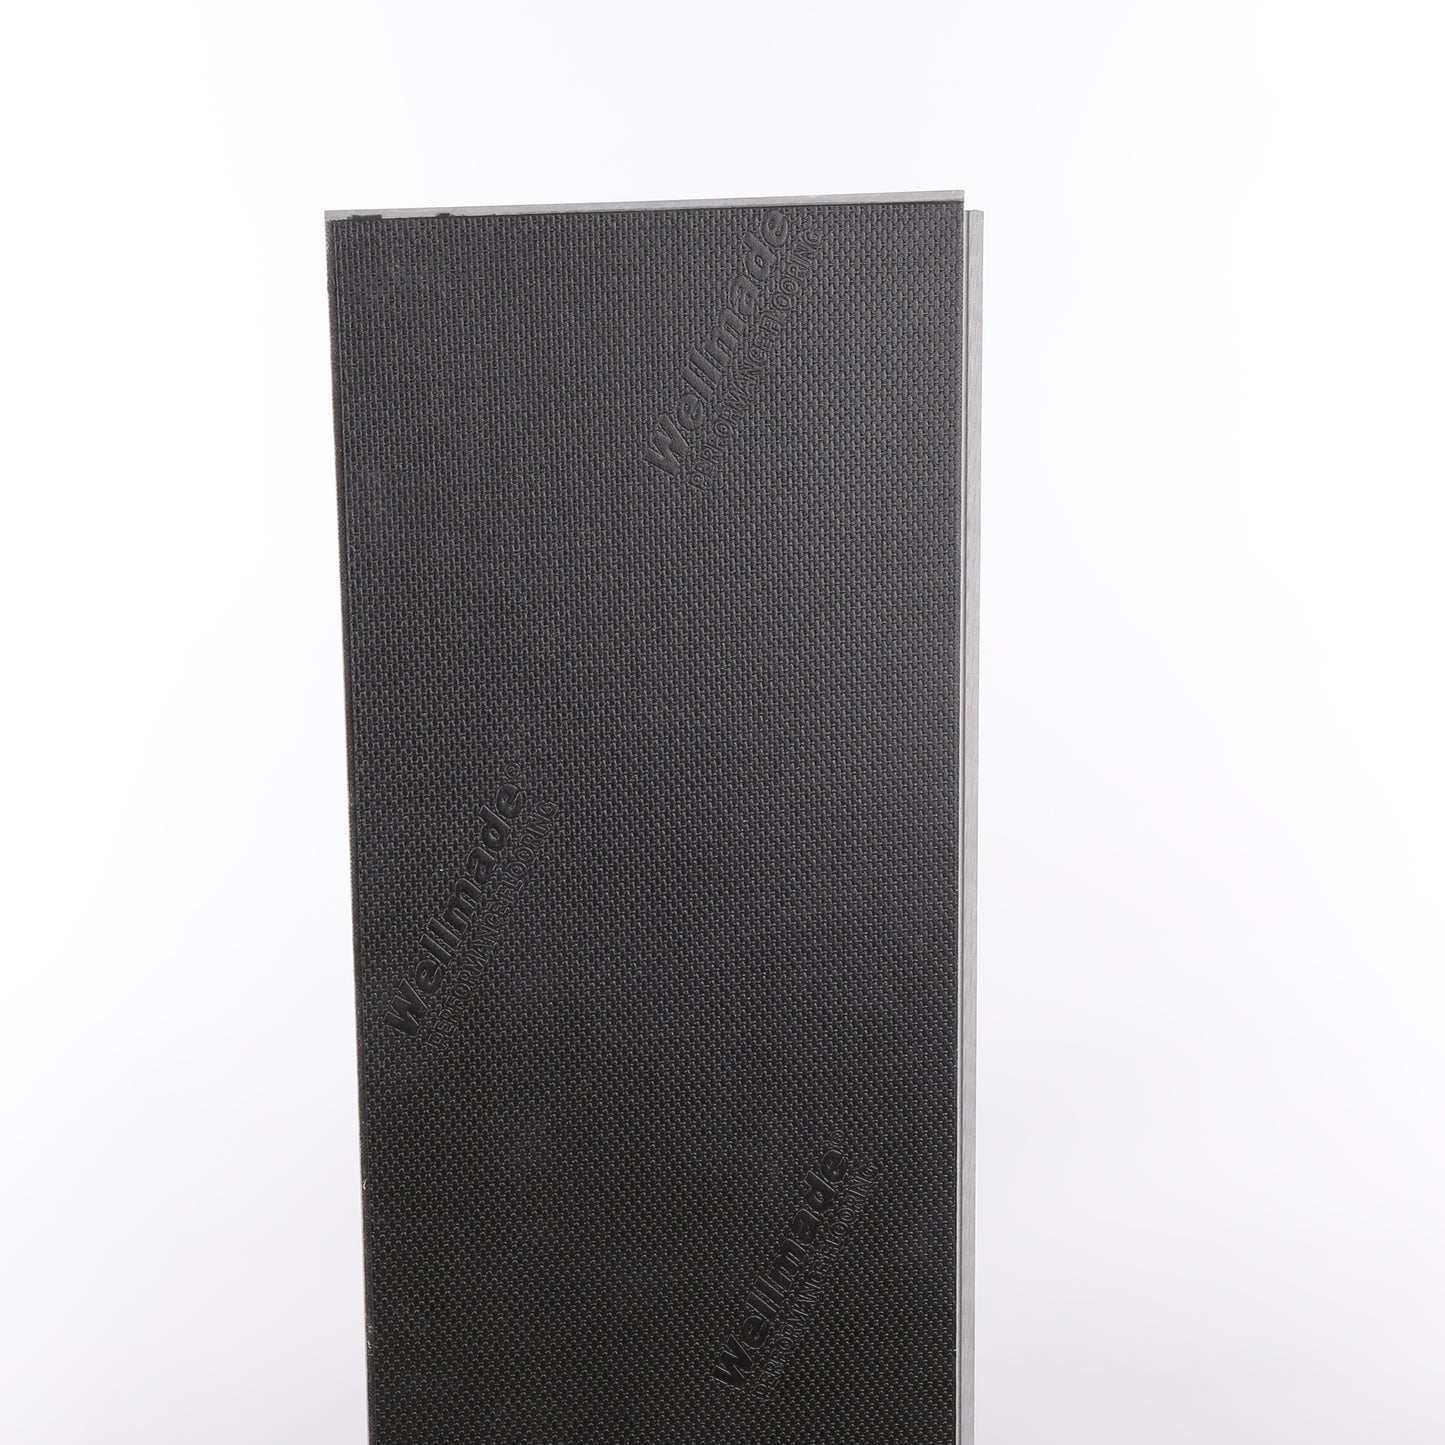 5mm Tawny Pine HDPC® Waterproof Luxury Vinyl Plank Flooring 7.20 in. Wide x 60 in. Long